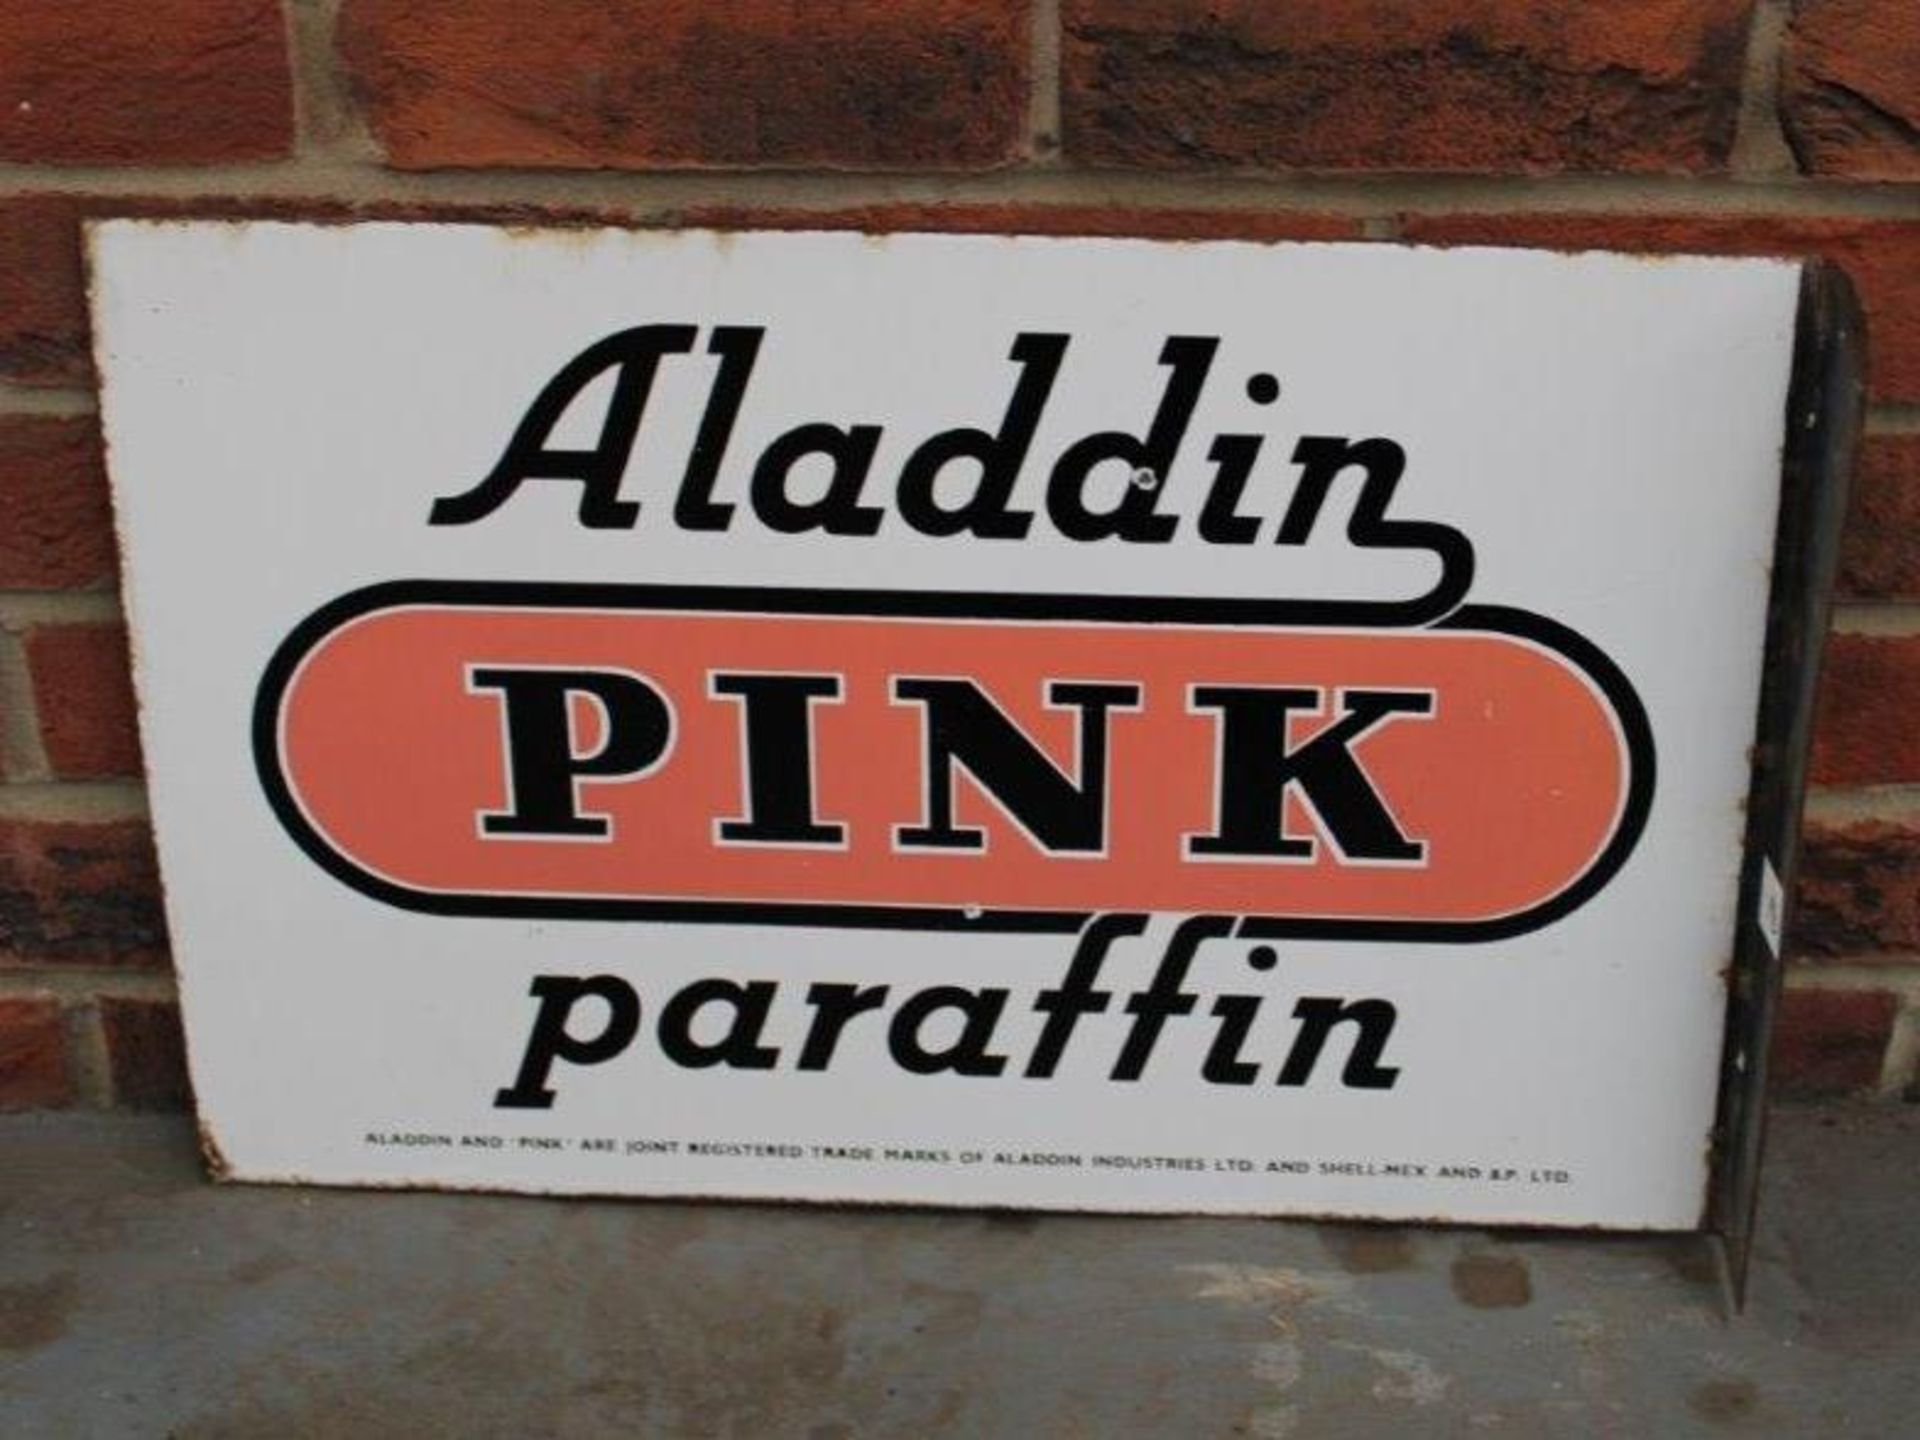 Aladdin Pink Paraffin Double Sided Vintage Enamel Flanged Sign - Image 2 of 2